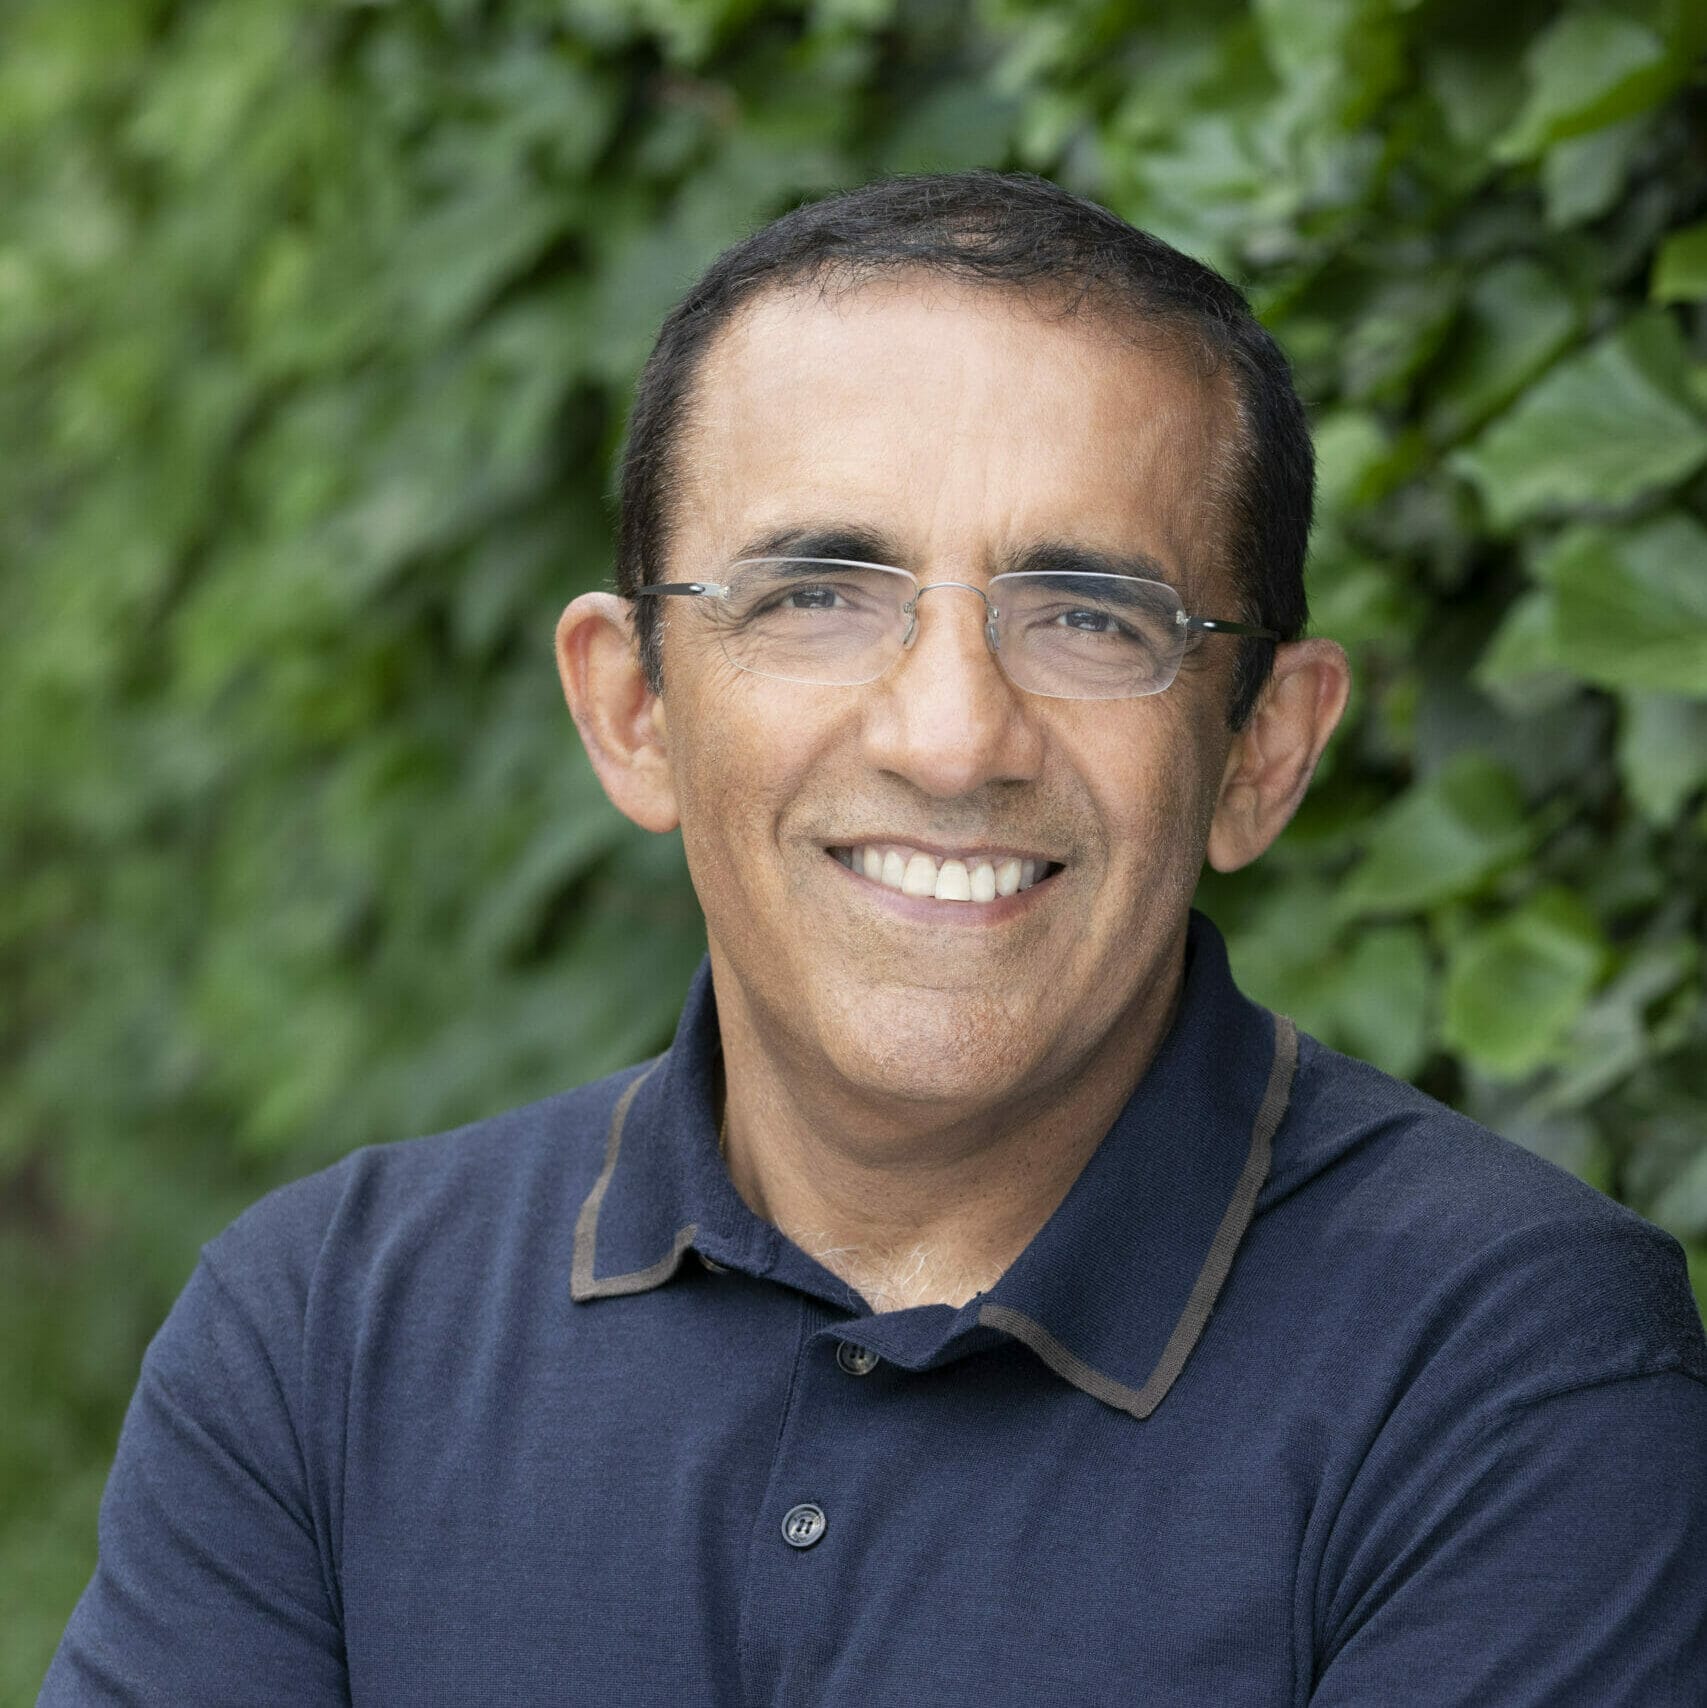 Headshot of Ranjay Gulati in a dark blue shirt against a leafy green background